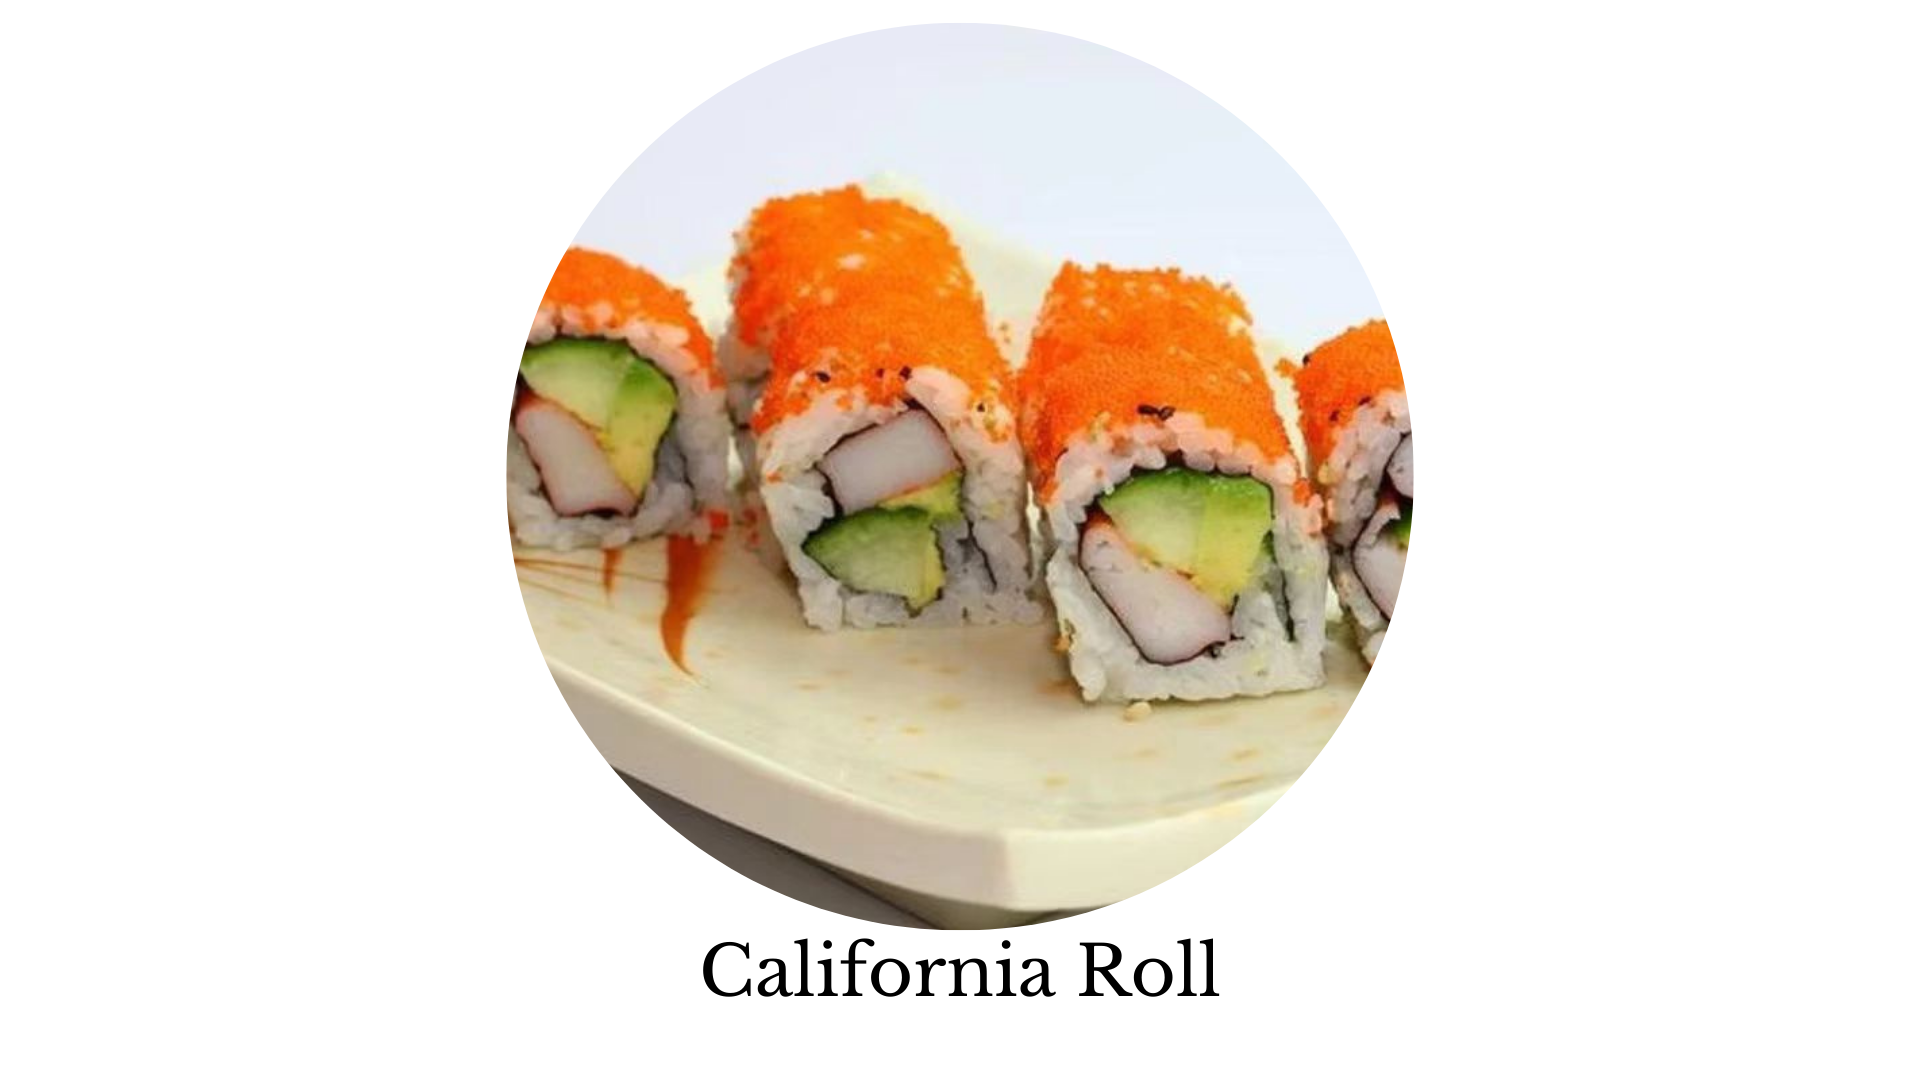 california roll, sushi, sashimi, sushi near me, sushi places near me, best sushi near me, sushi rice